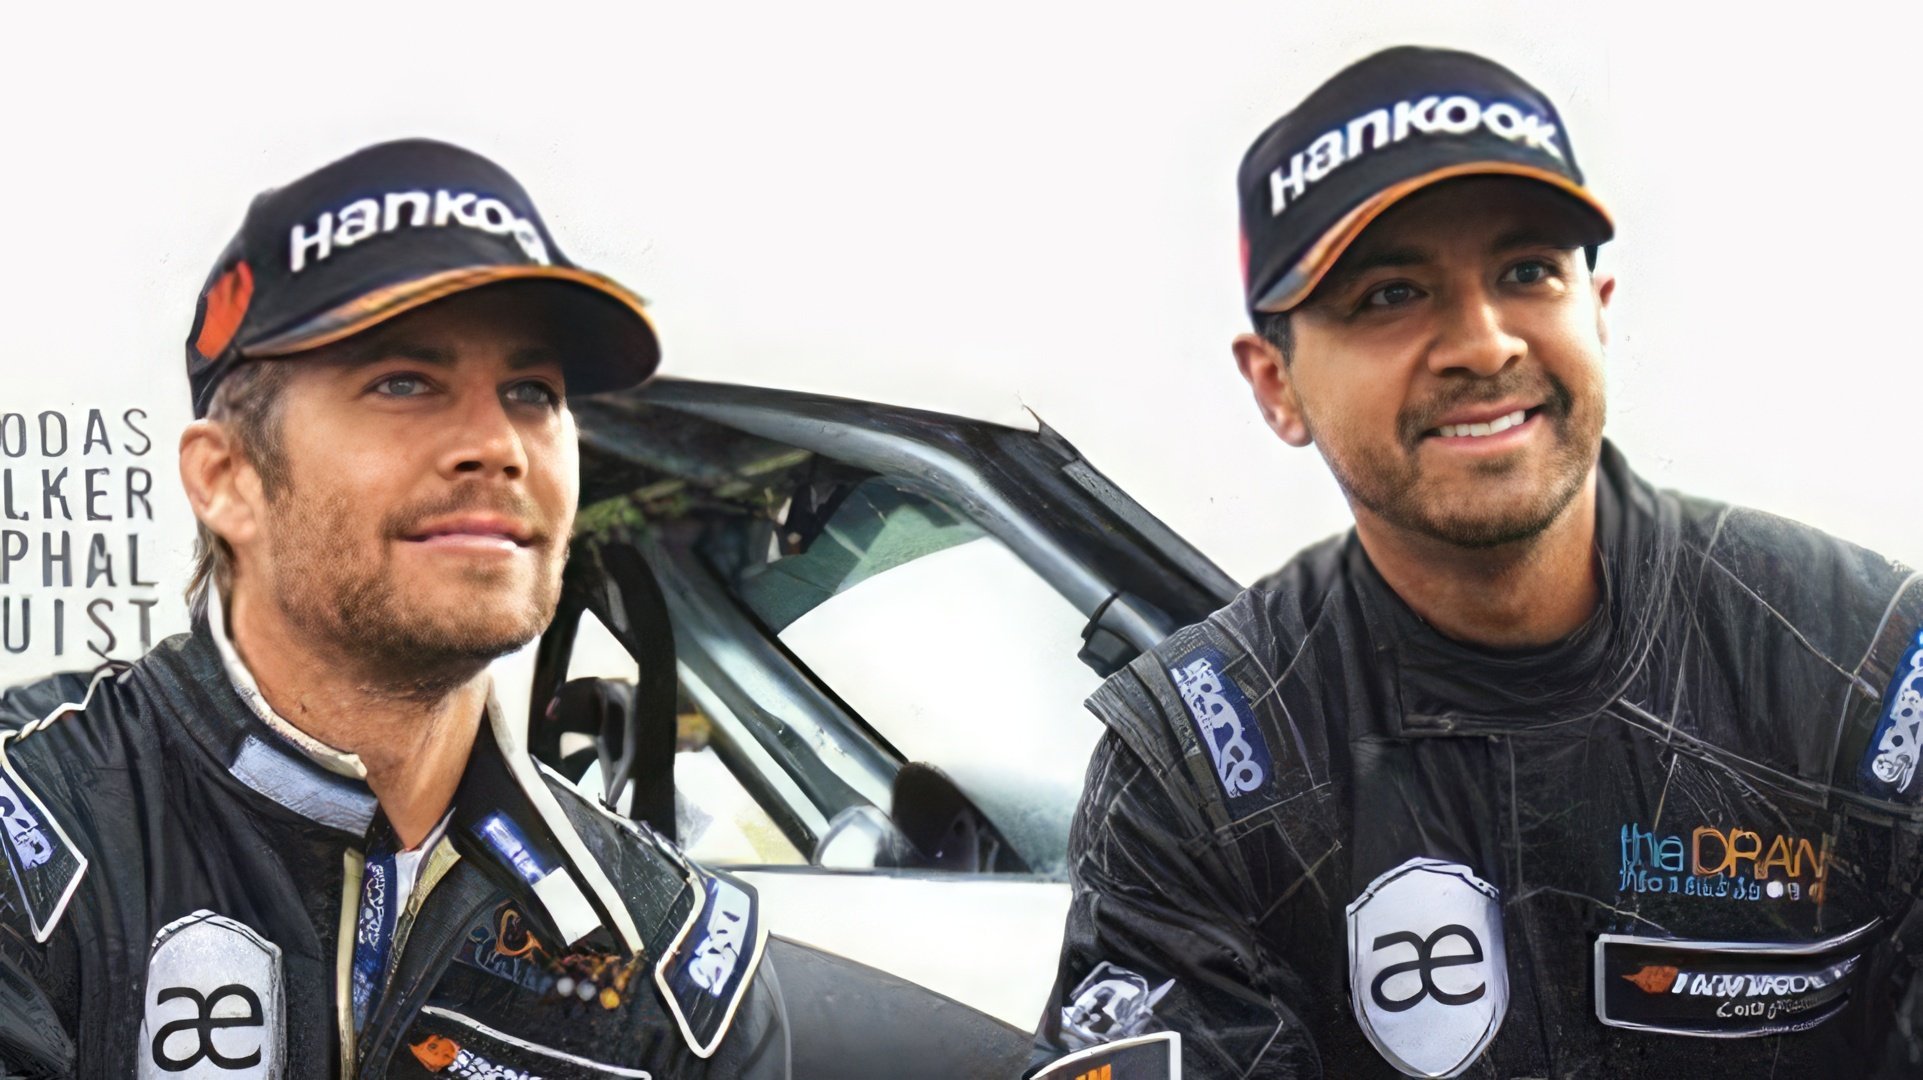 Paul Walker and his friend, racing driver Roger Rodas